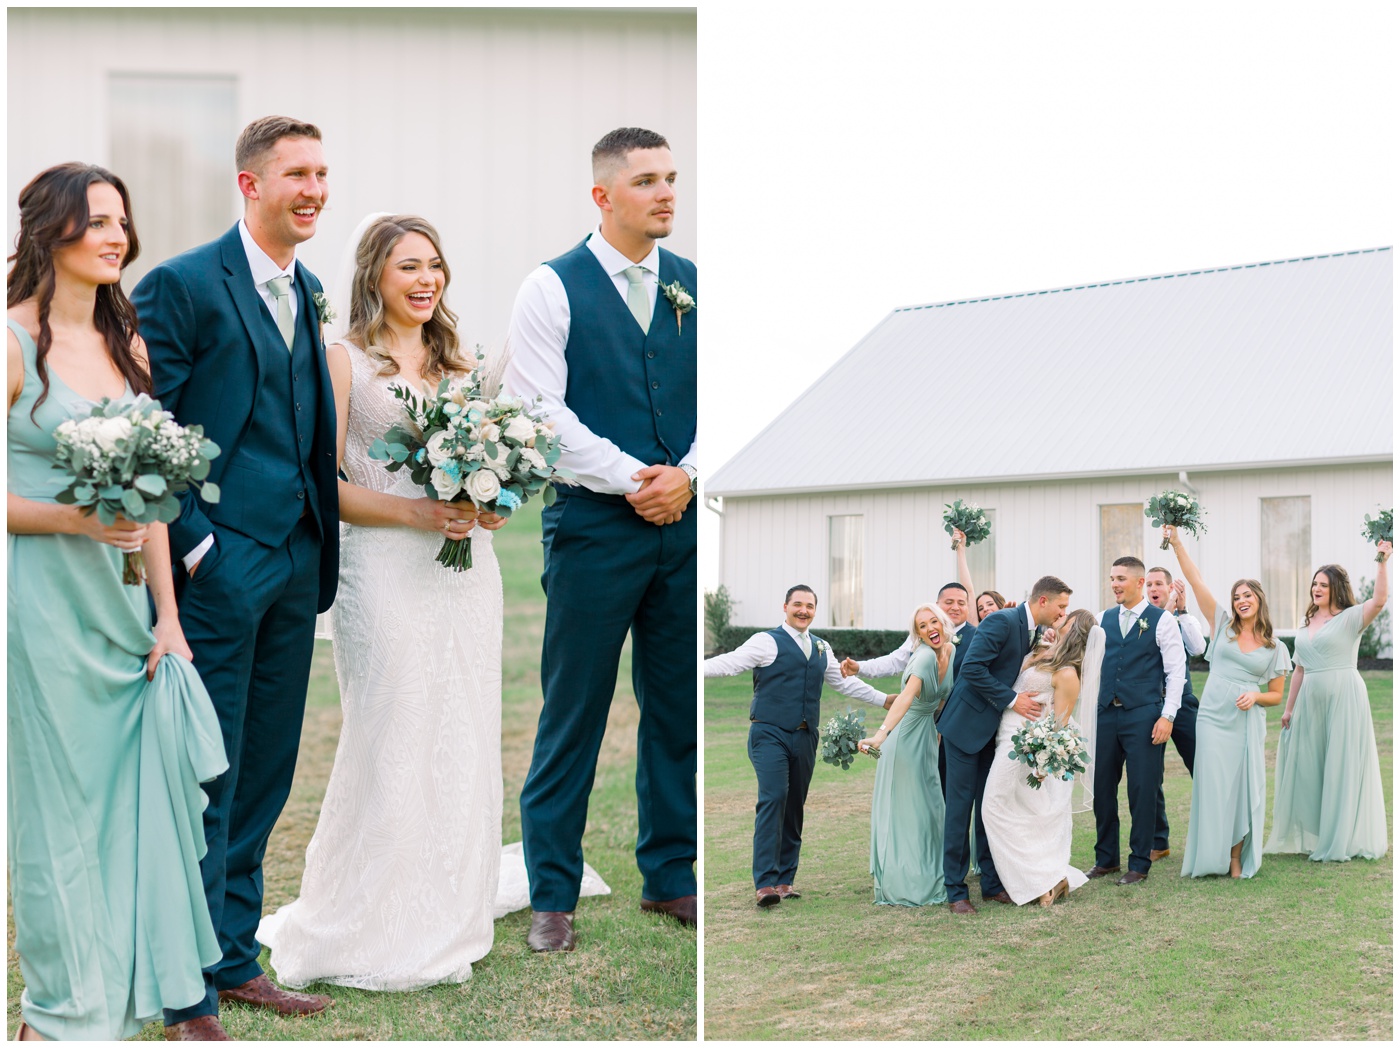 Texas farmhouse wedding | the wedding party celebrates as the bride and groom kiss